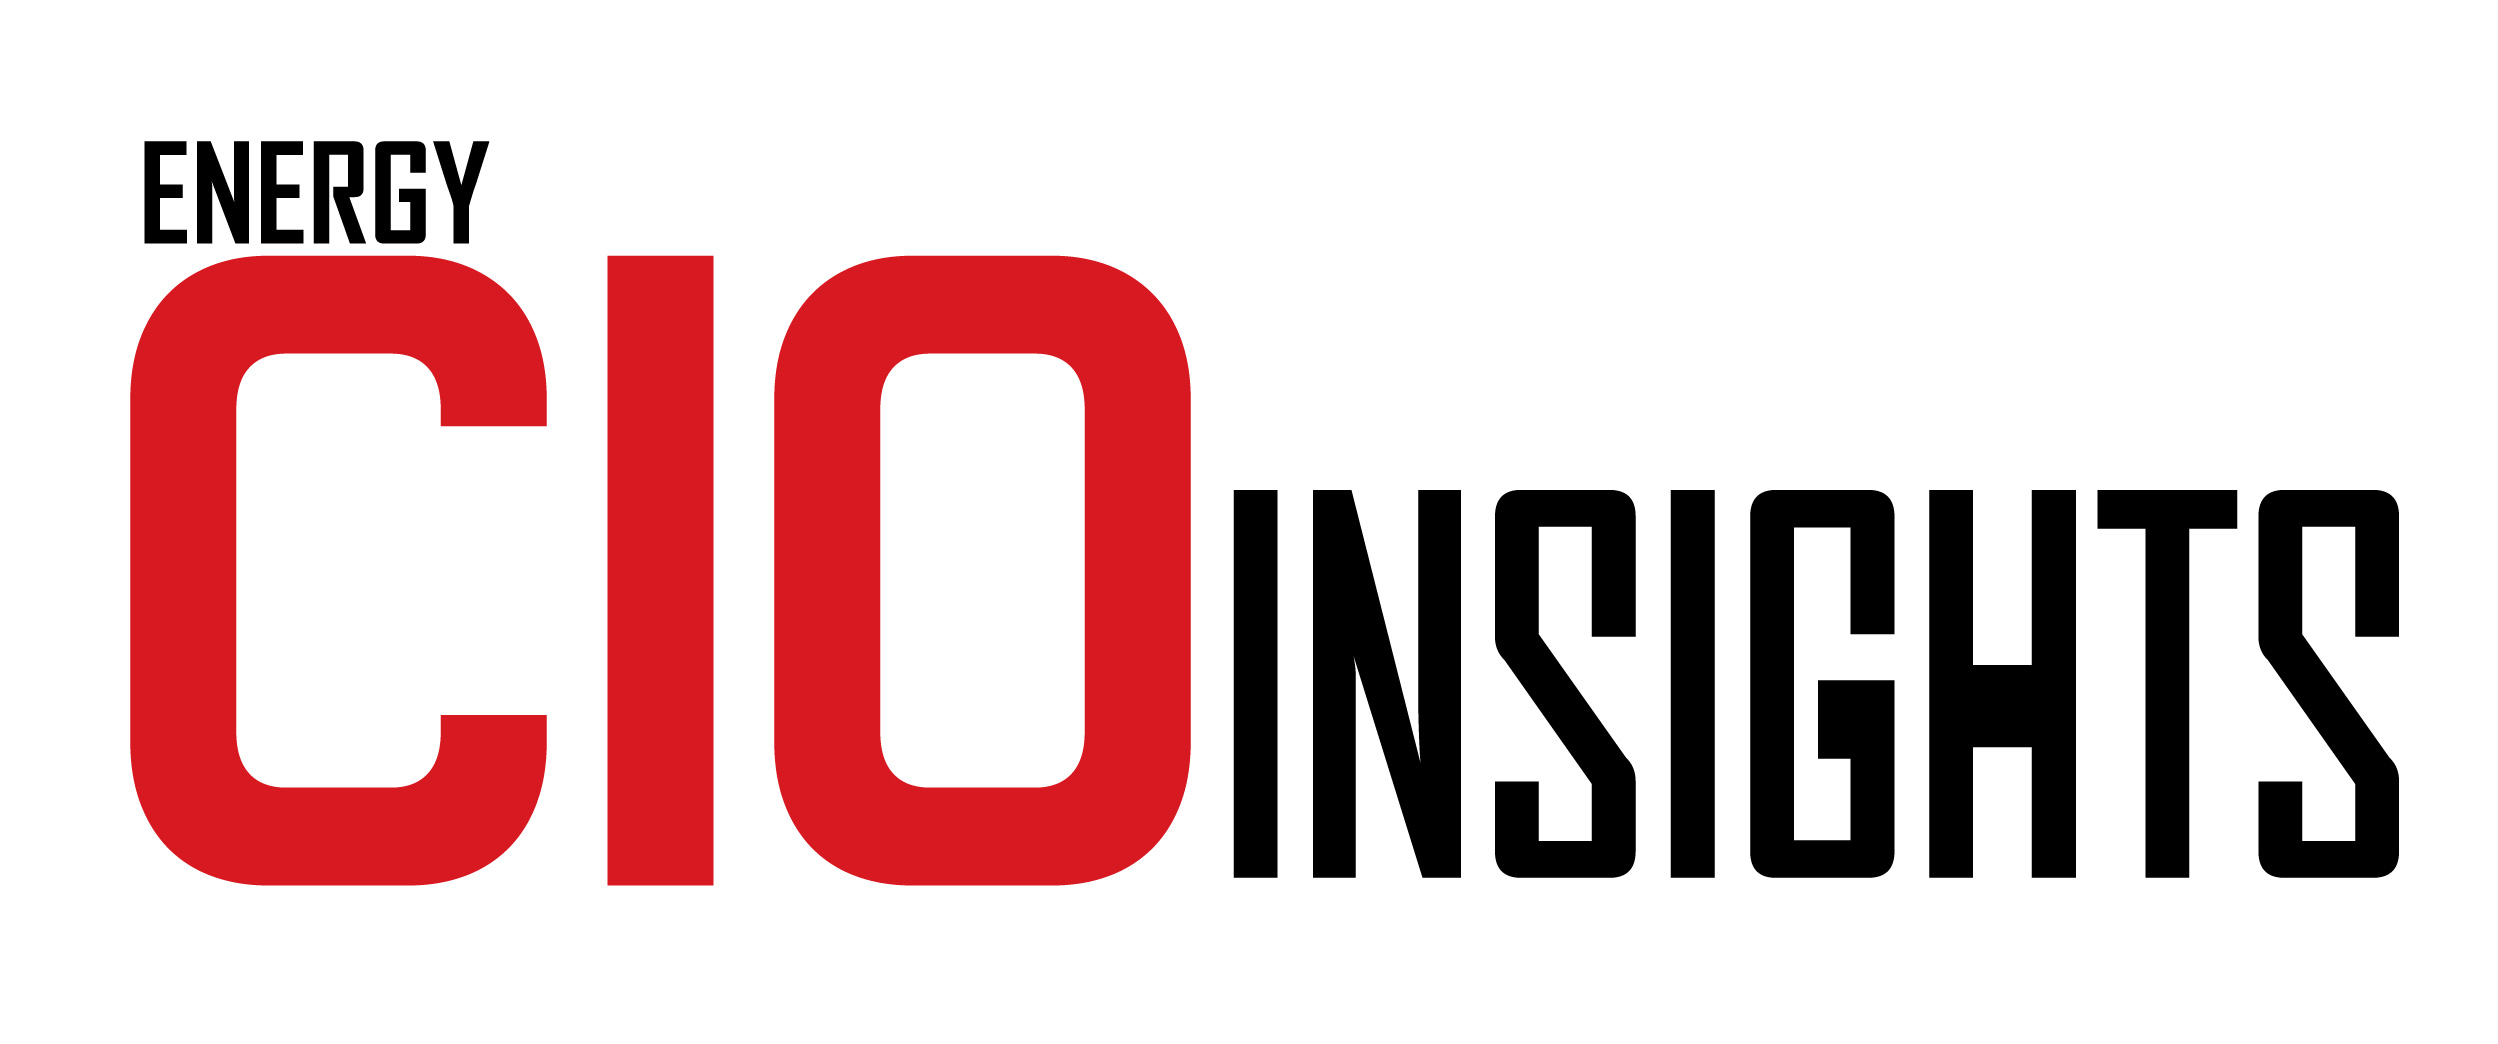 Energy-Cio-Insights logo-01.jpg